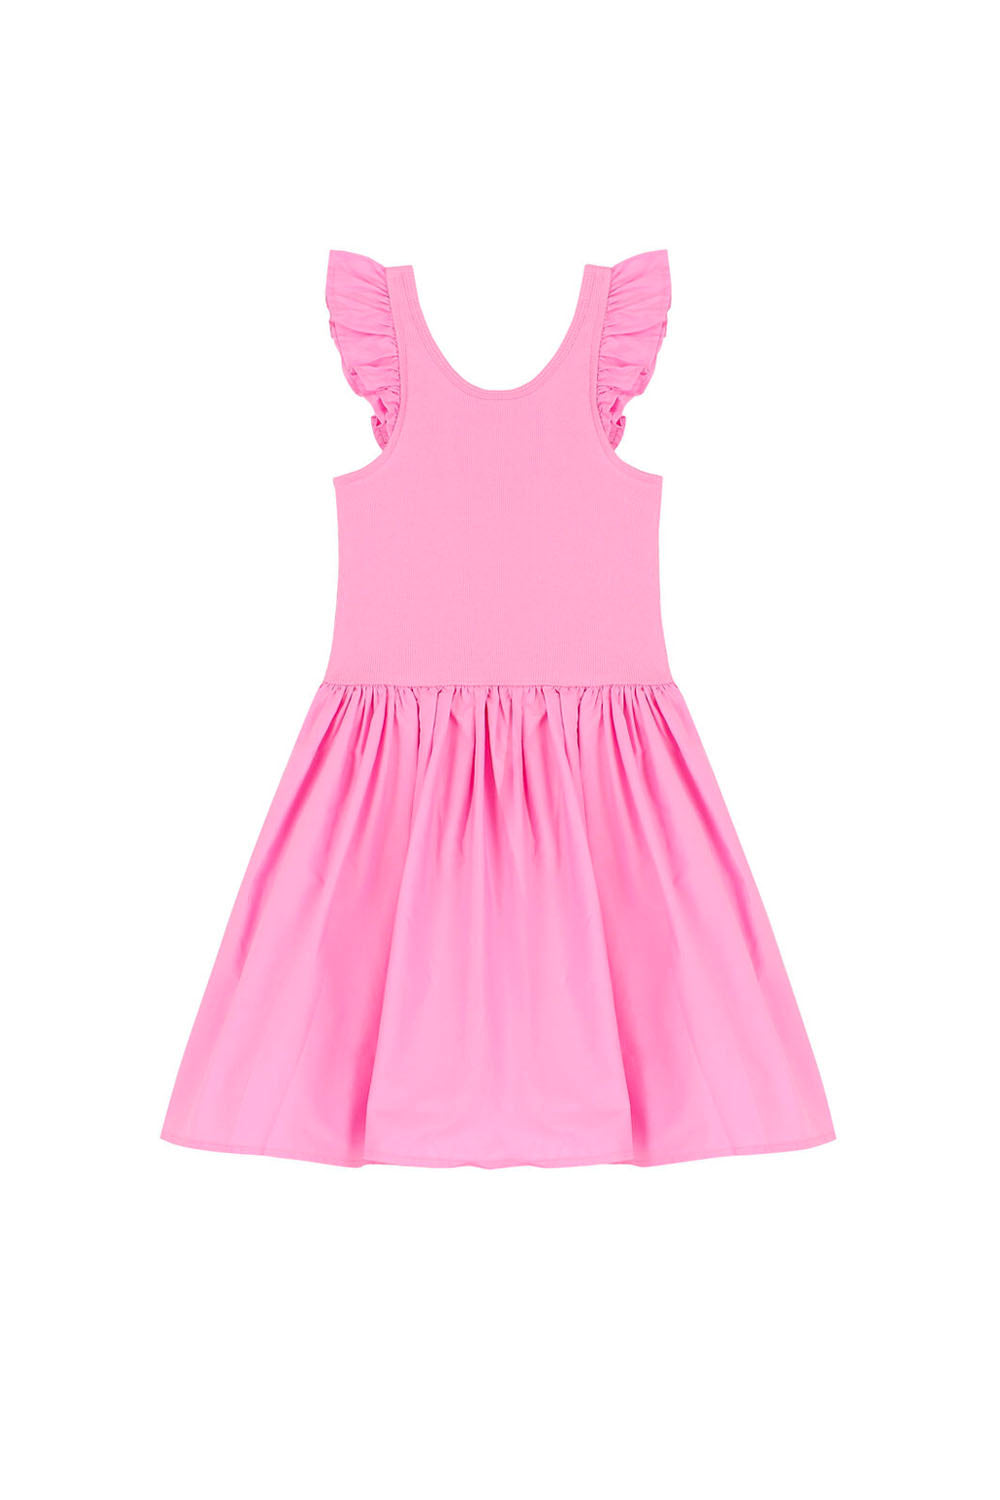 ​Cloudia Dress Short Sleeves for Girls - Maison7